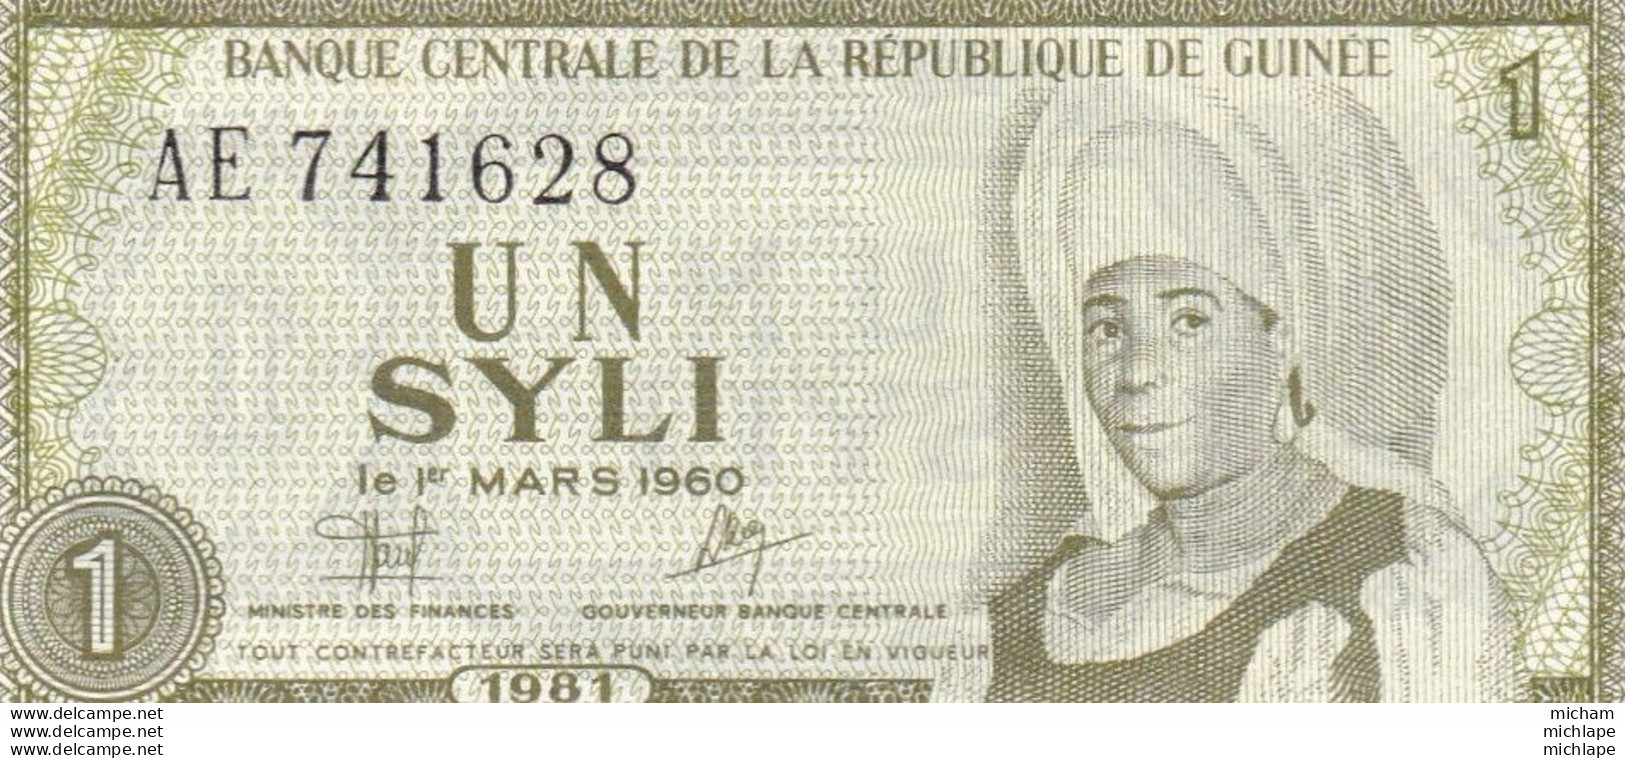 Guinee 1 Syli  1981  - Neuf - Guinea